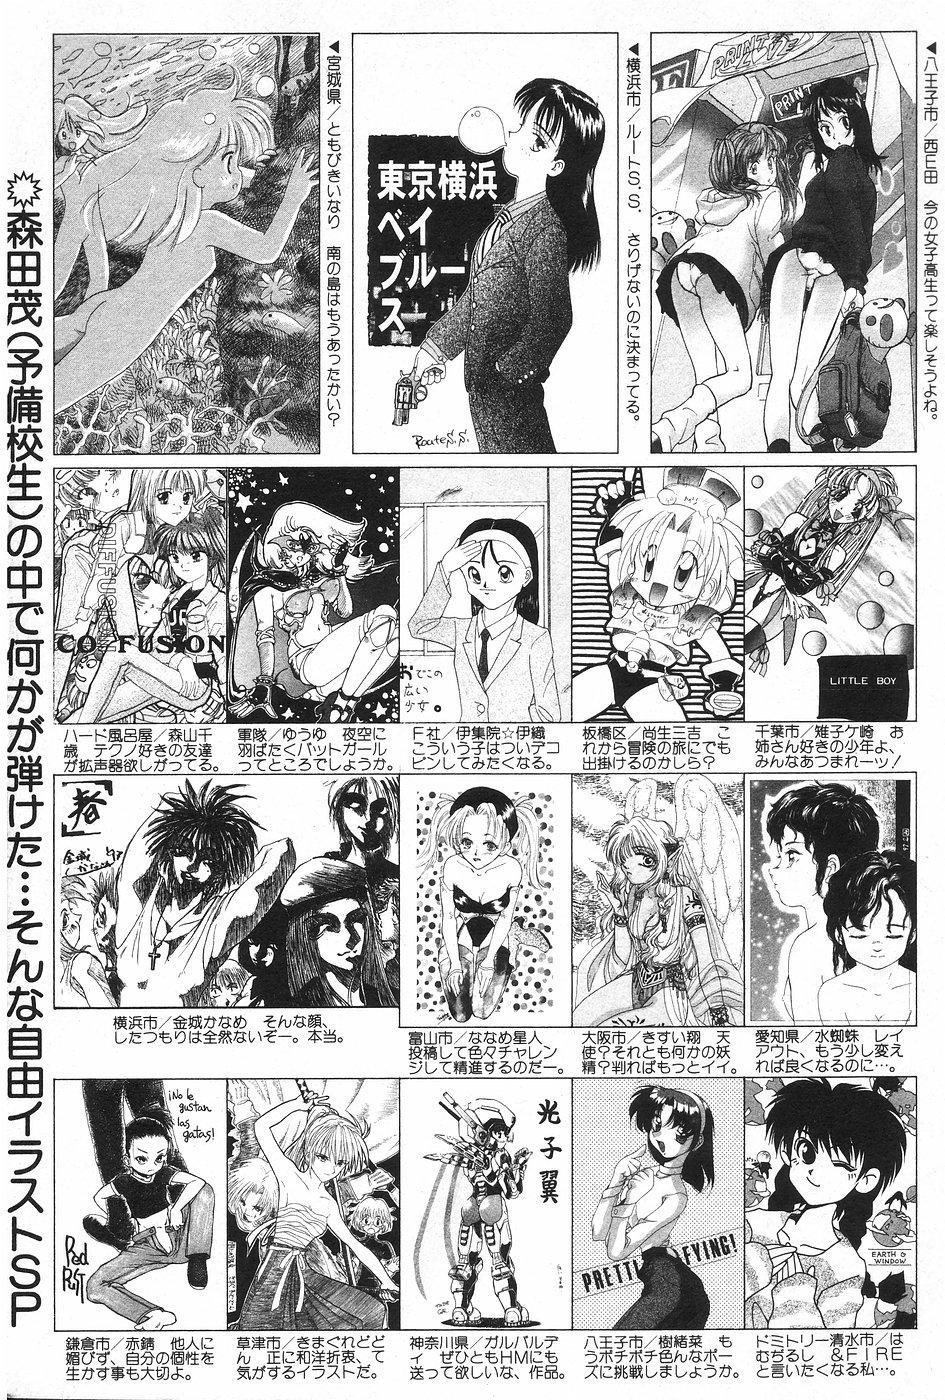 Manga Hotmilk 1997-04 157